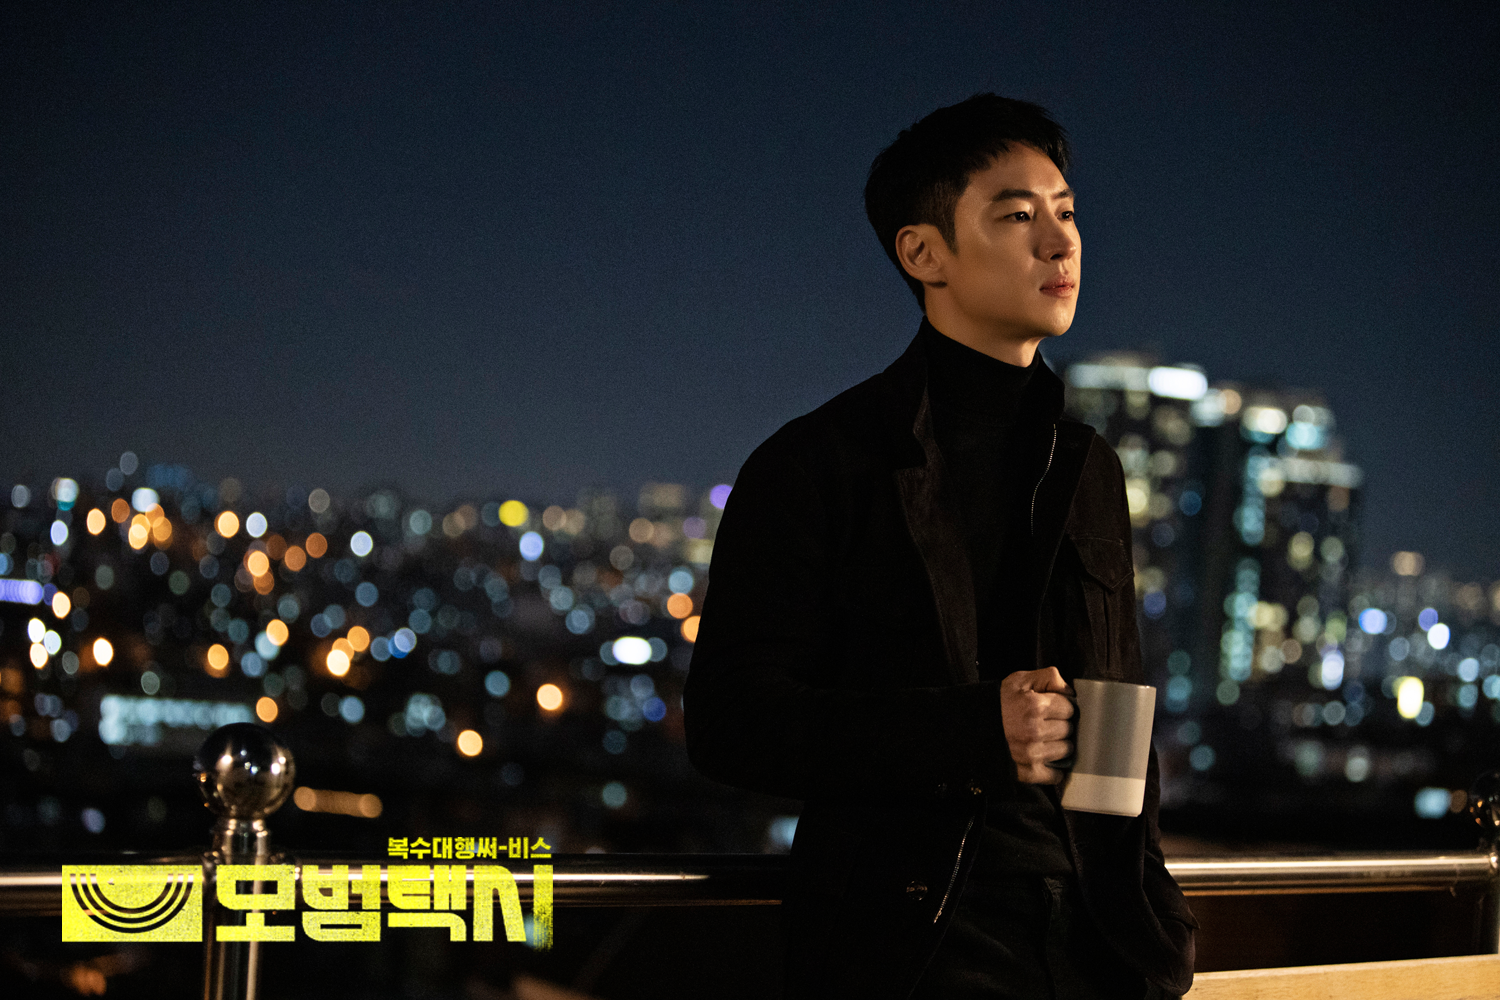 Lee Je Hoon Fits Up As Darkish Hero In New Stills For 'Taxi Driver'. Kdramapal GossipChimp. Trending K Drama, TV, Gaming News